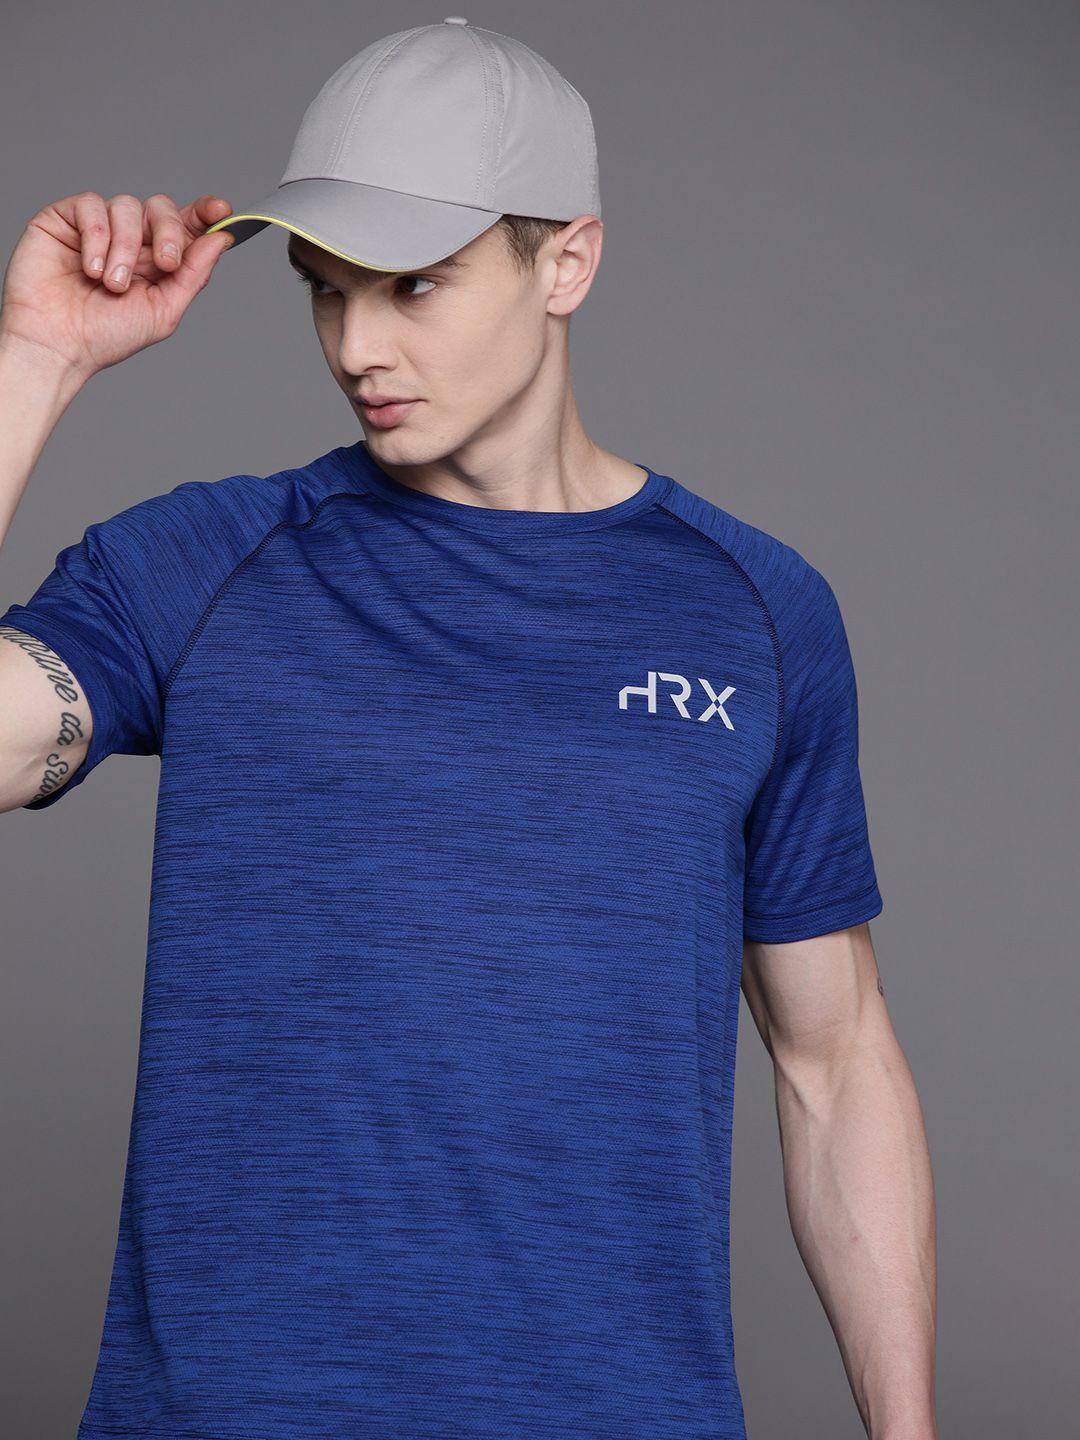 HRX by Hrithik Roshan Men Brand Logo Printed Raglan Sleeves Rapid-Dry Sports T-shirt